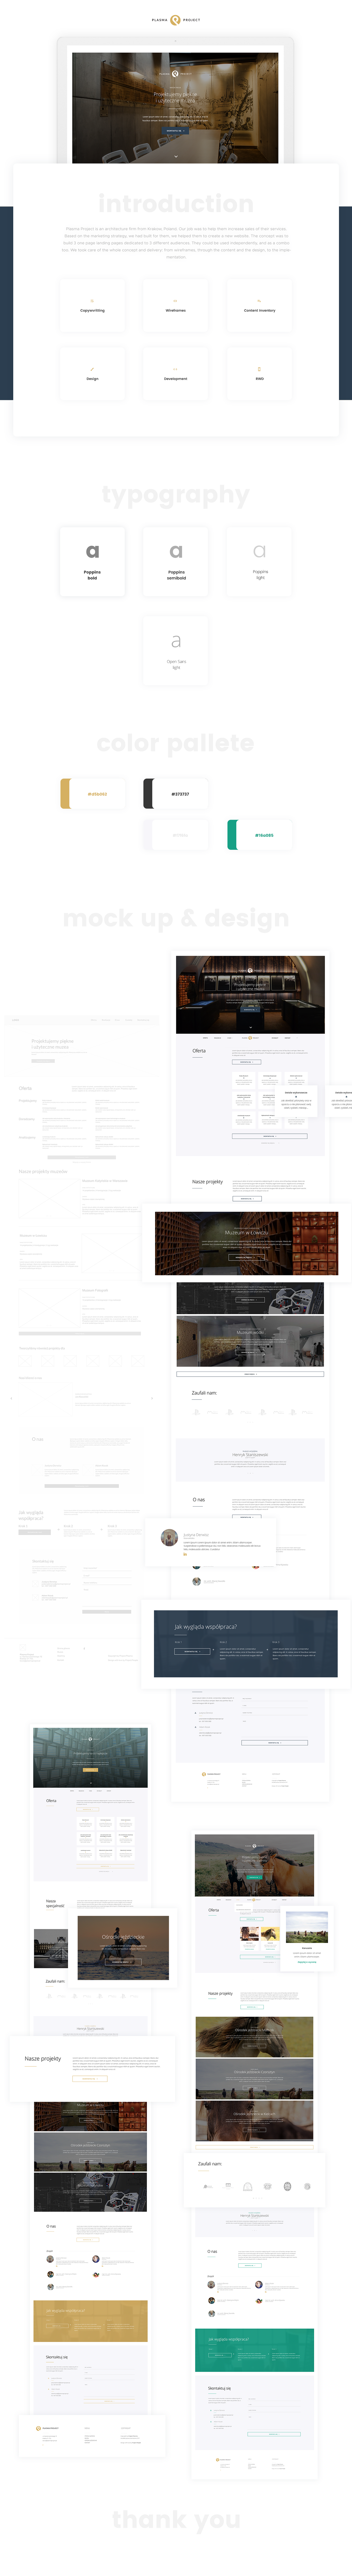 ux ui webstie redesin website Architecture website photo design polish site uxpin website landing page homepage